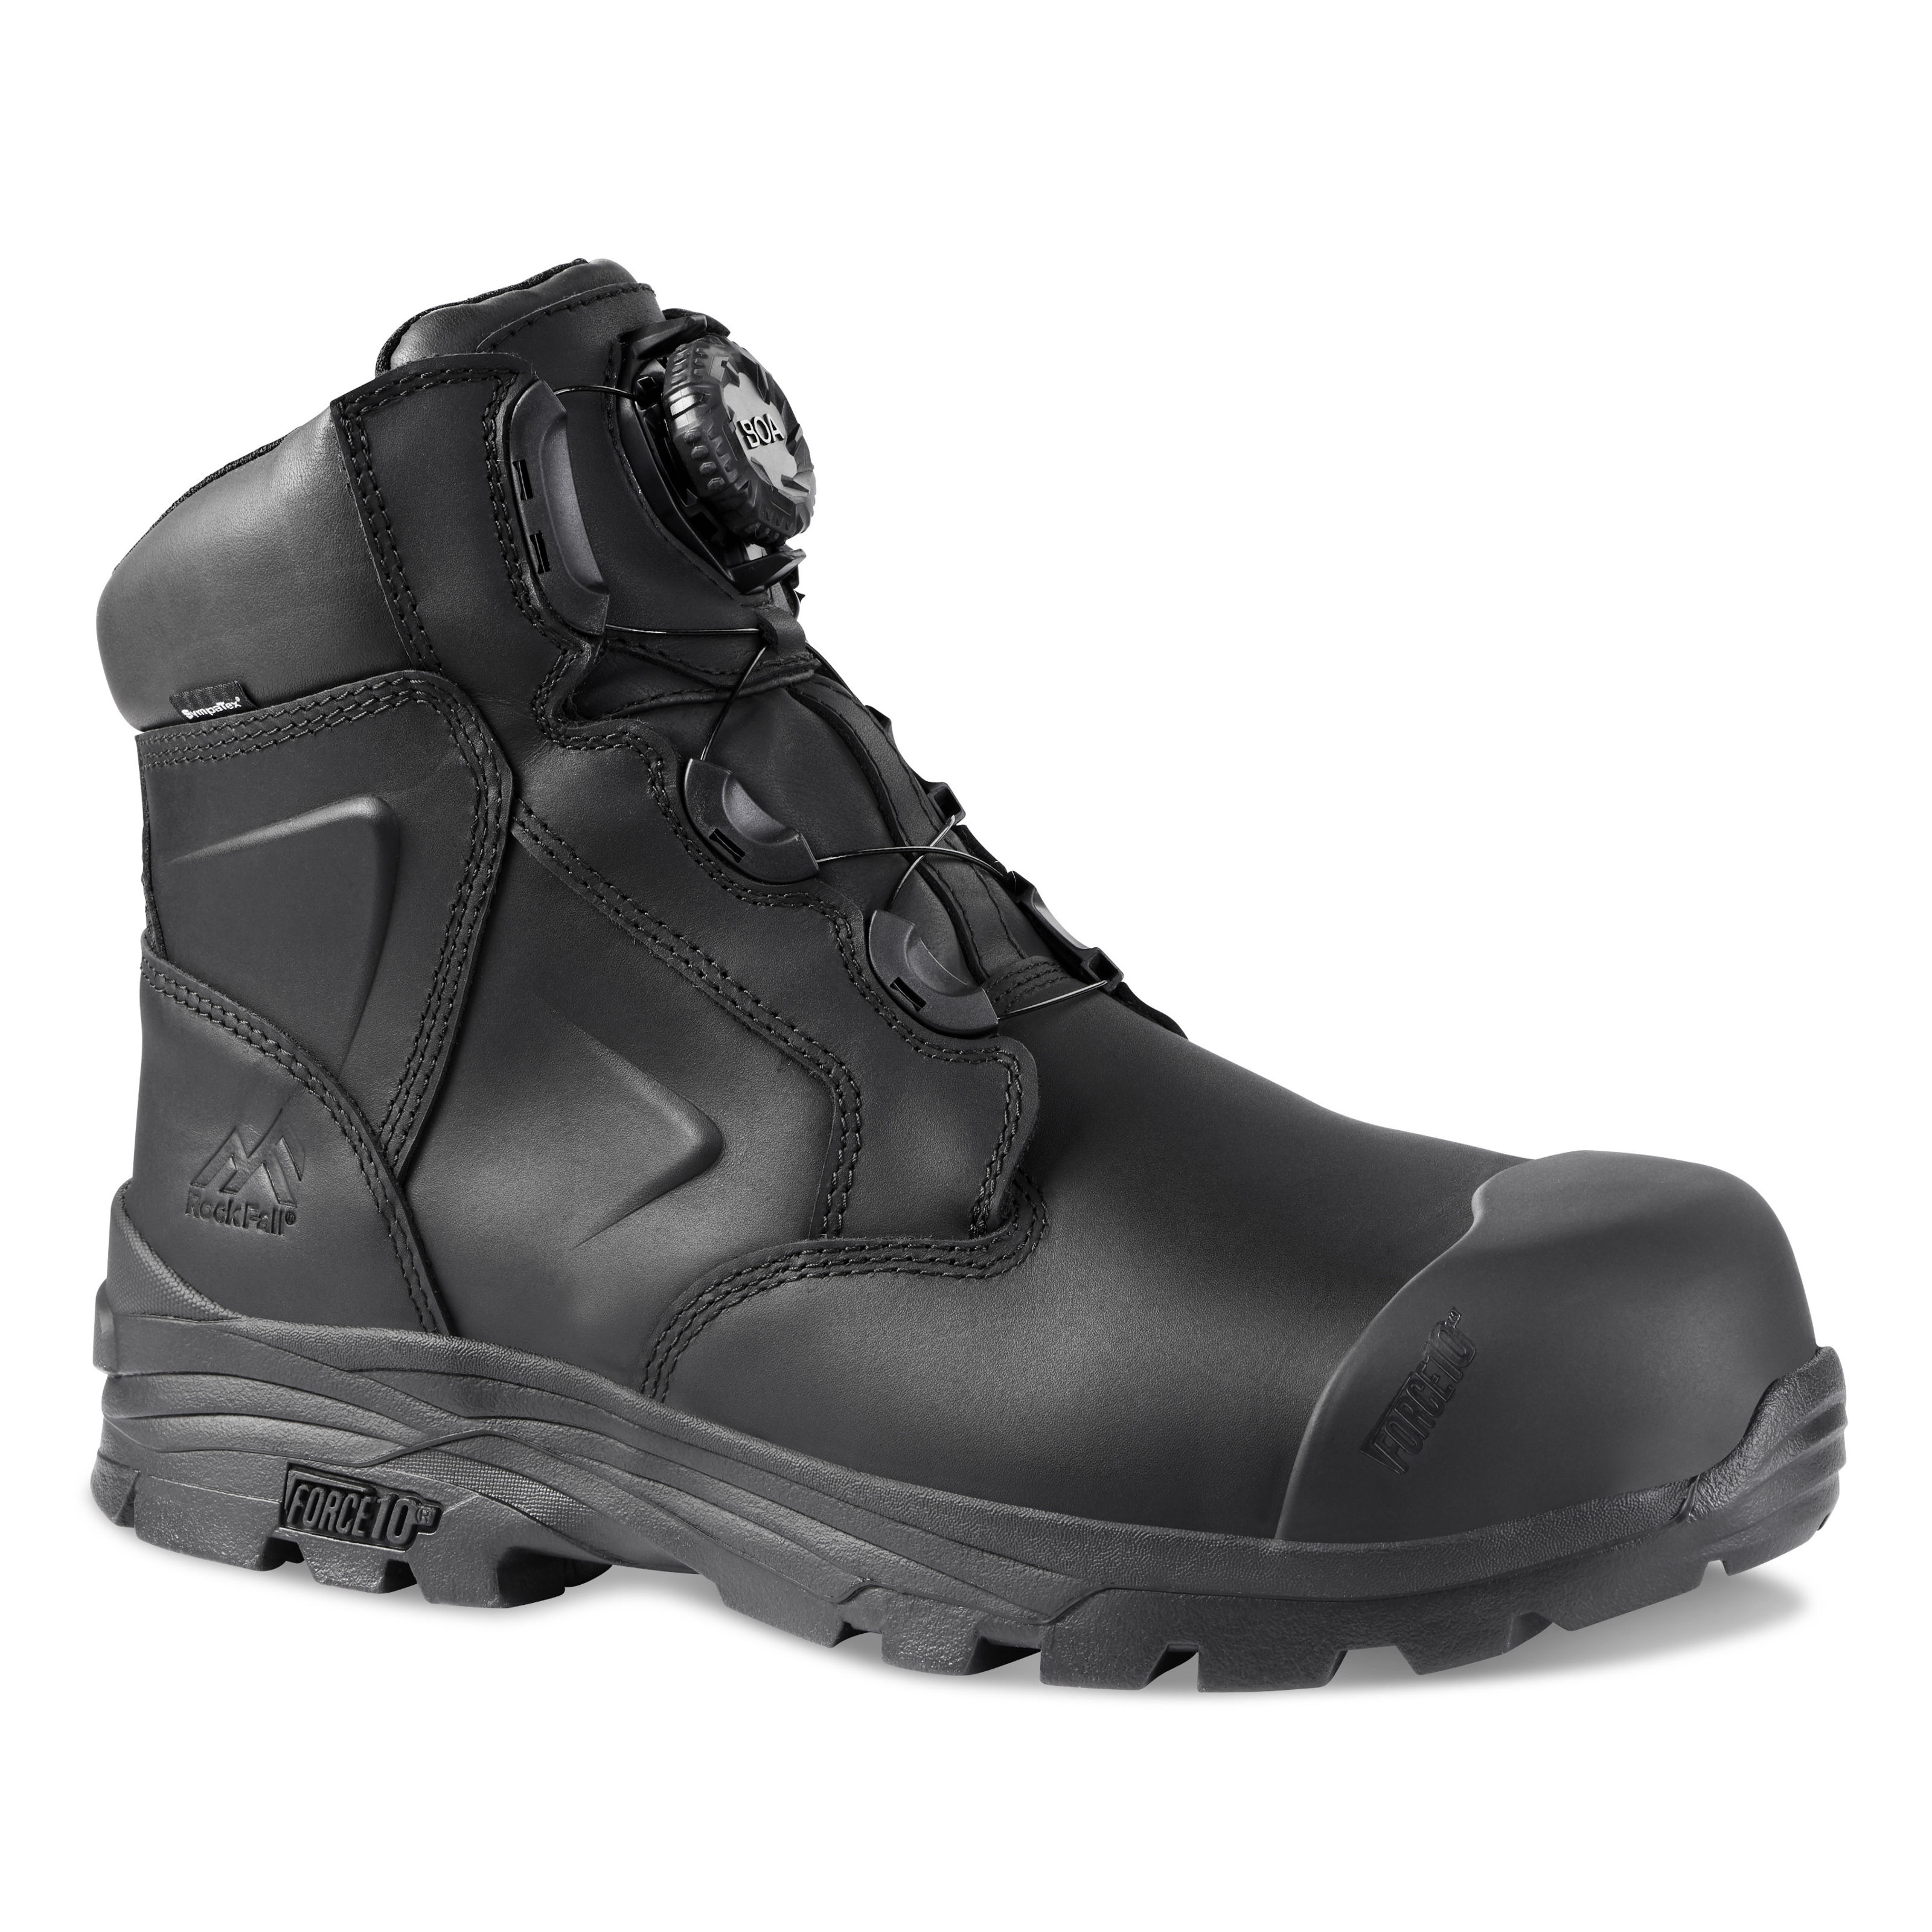 Rock Fall Dolomite Waterproof Safety Boots